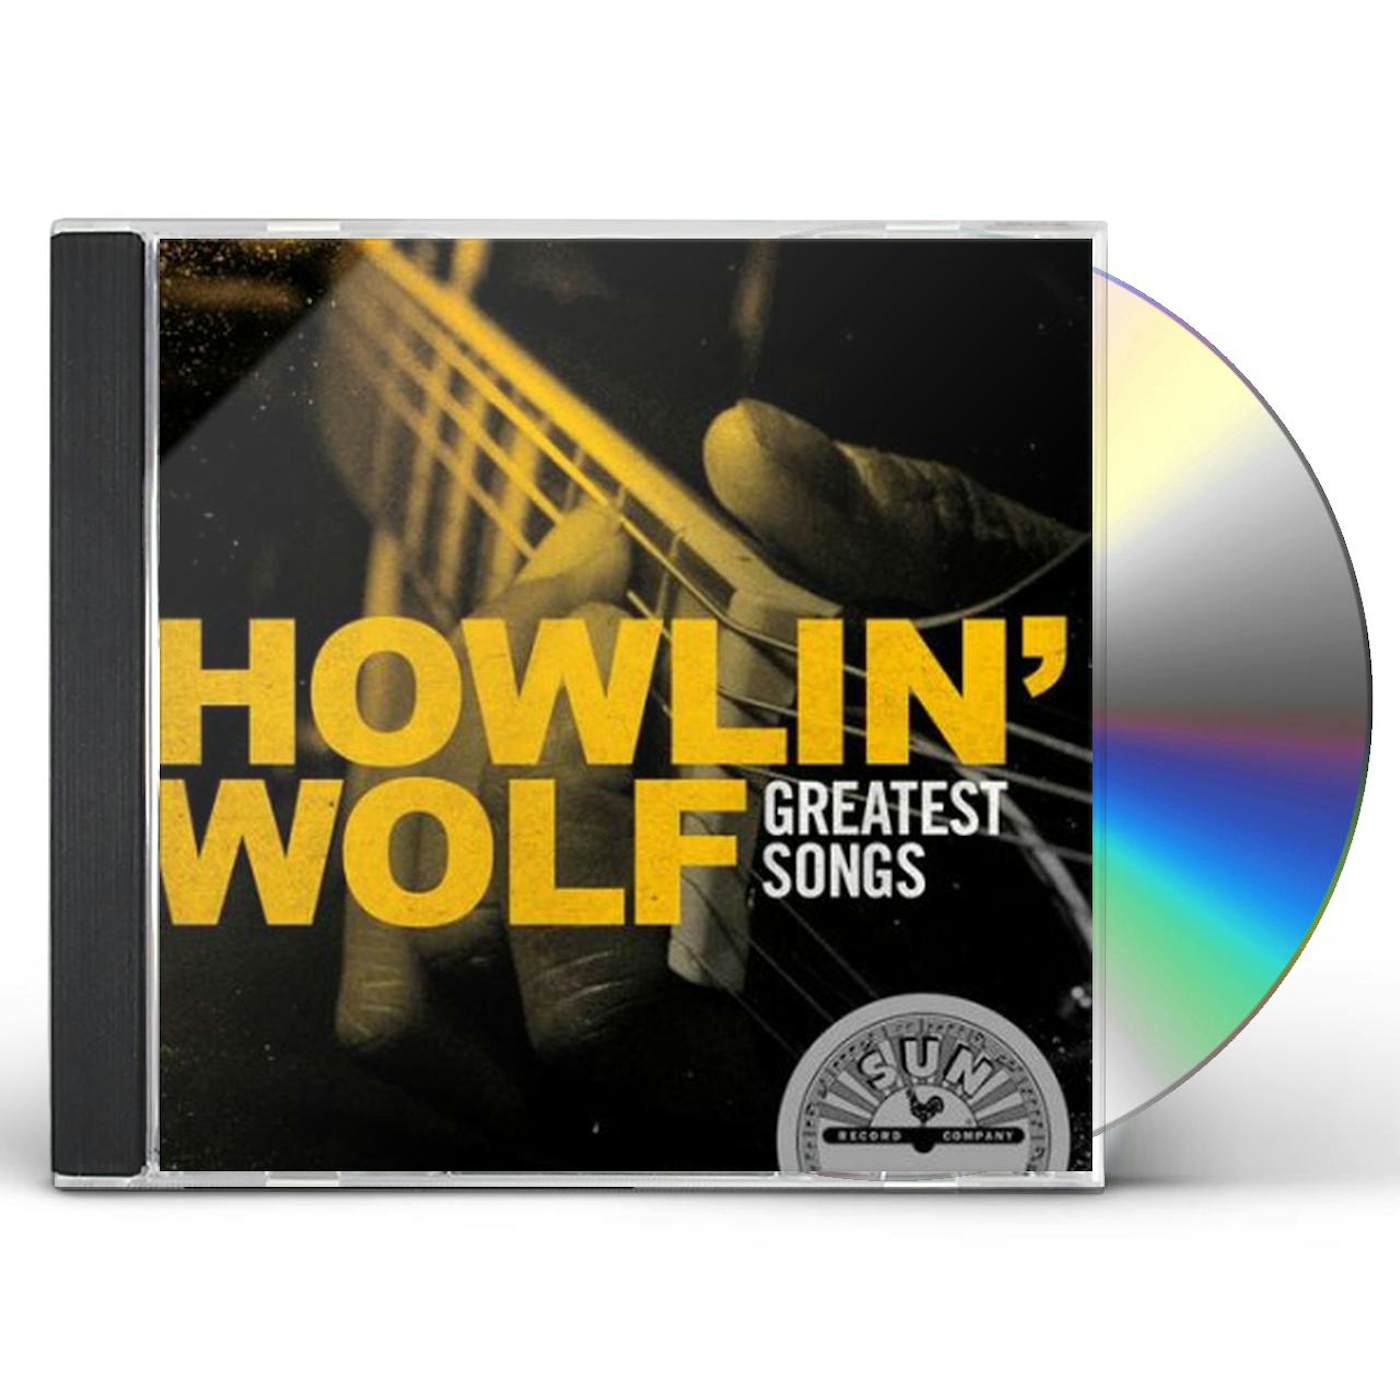 HOWLIN' WOLF GREATEST HITS CD